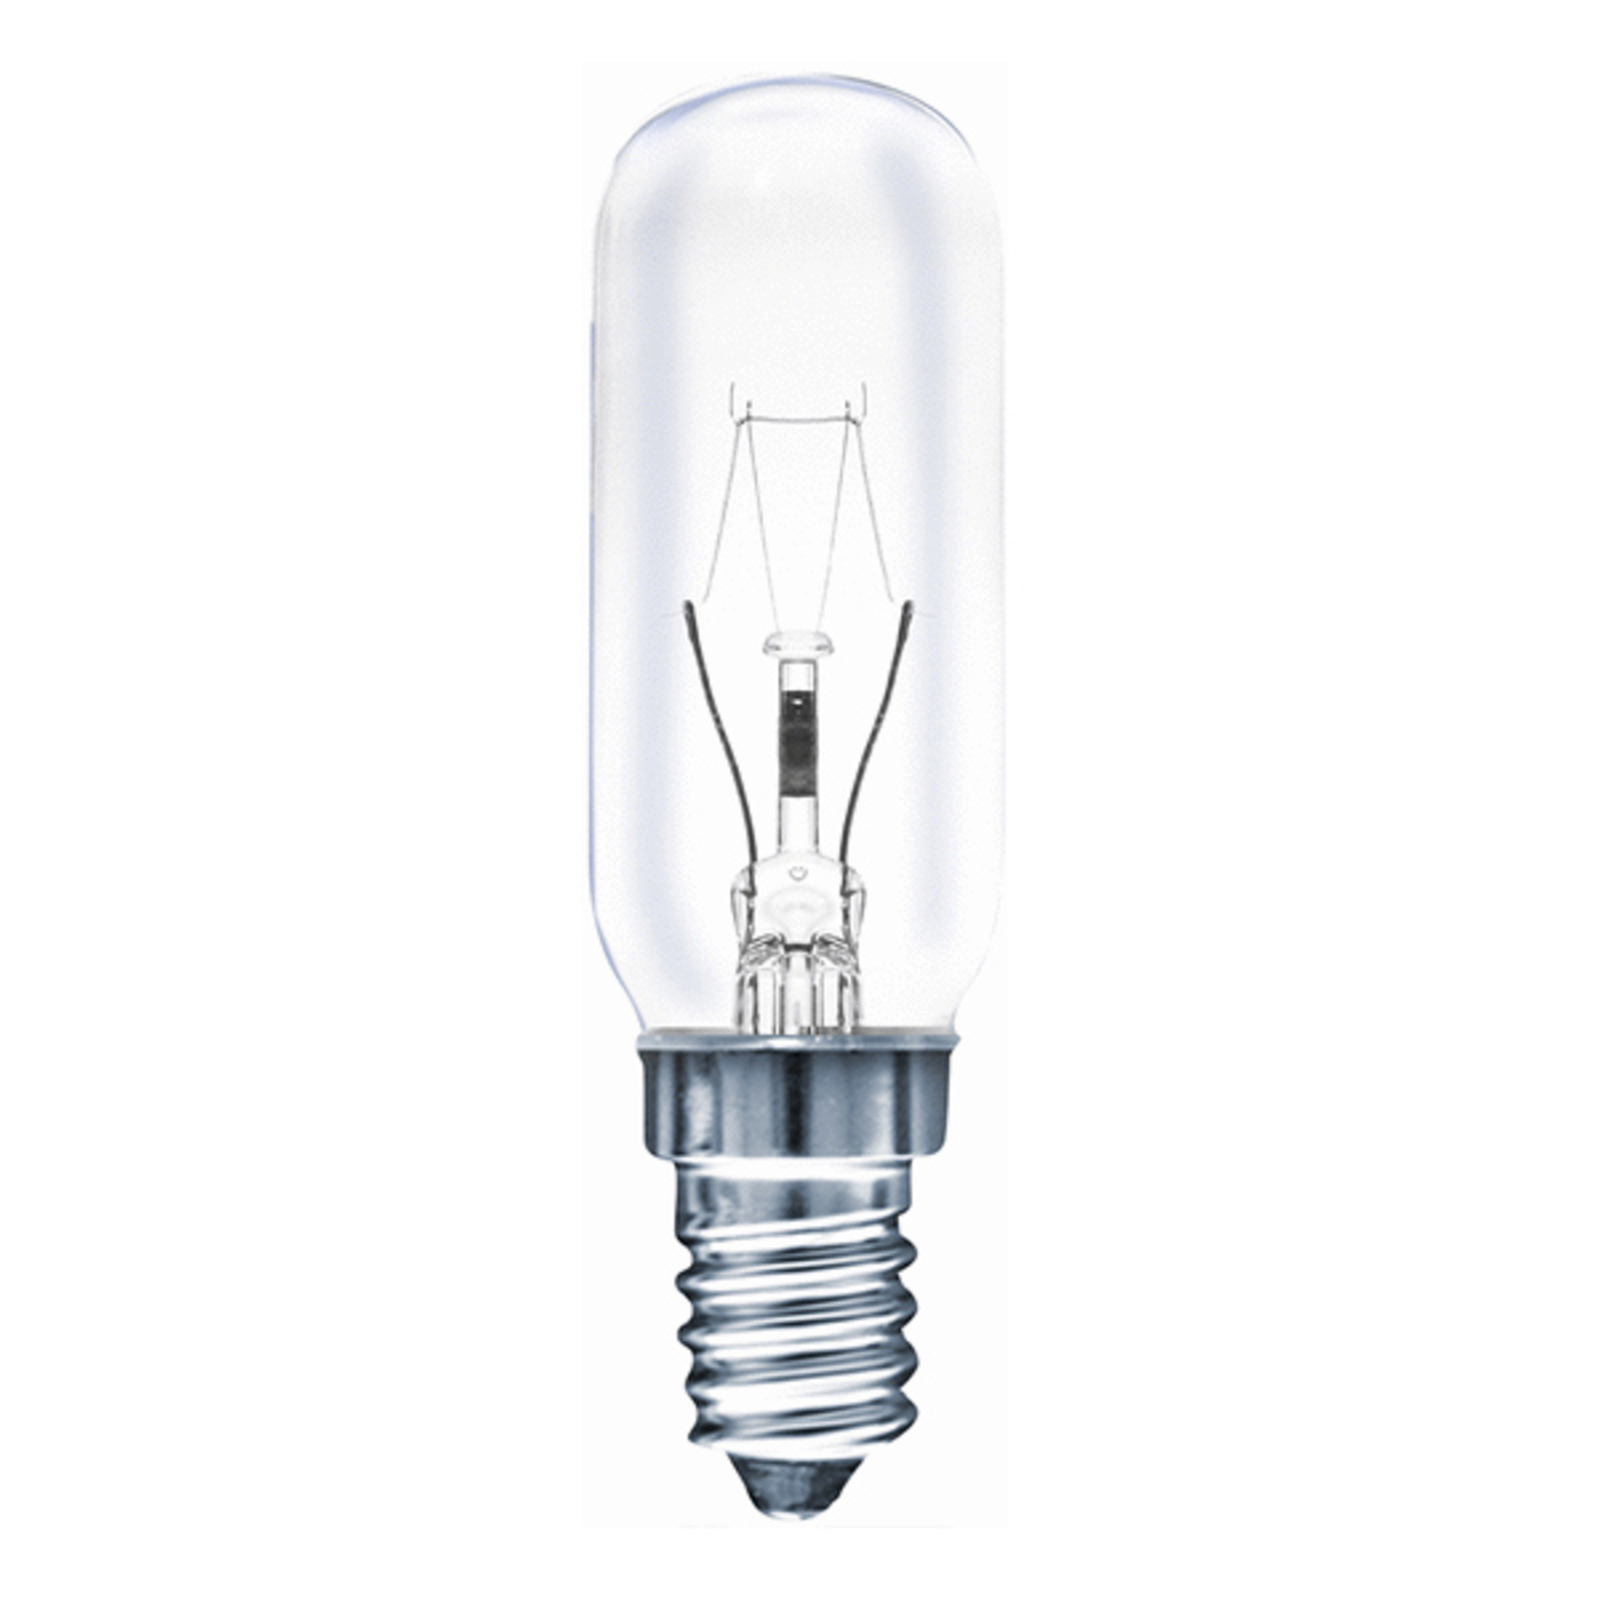 Beleefd winter Samengroeiing E14 40W buislamp transparant, warm wit | Lampen24.be